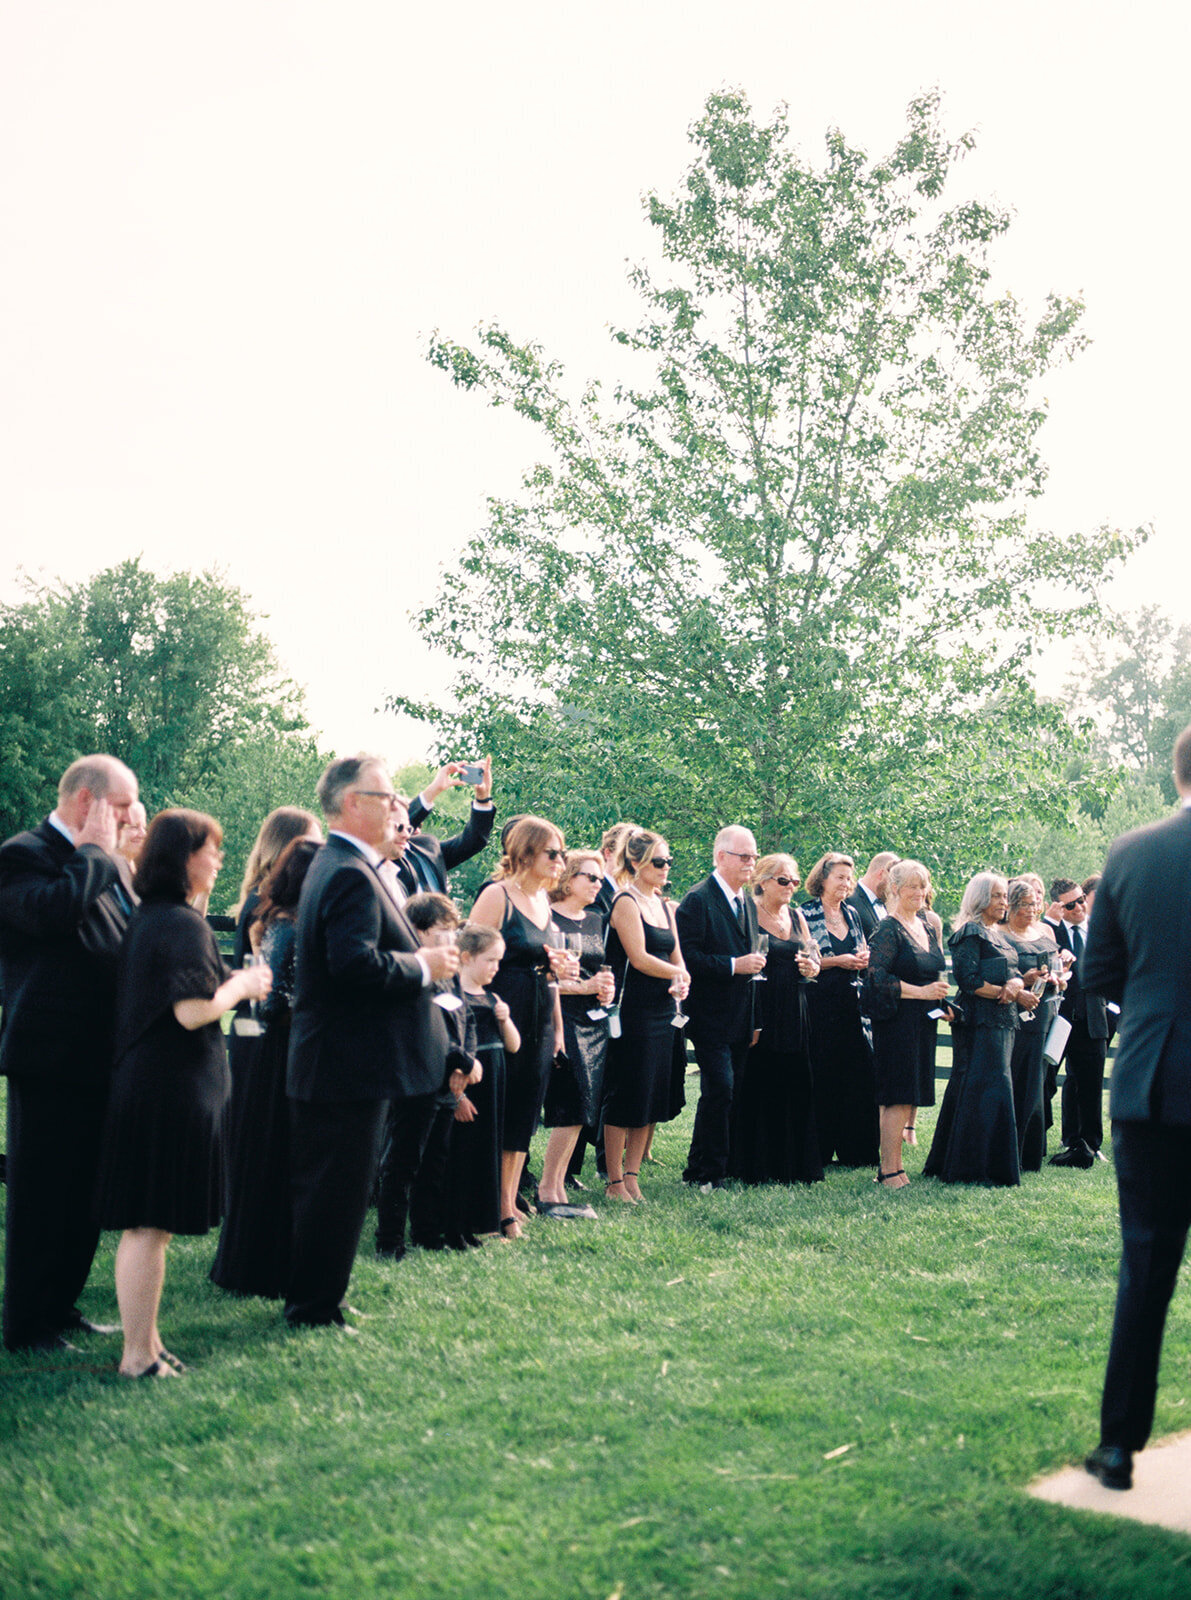 wedding guests wearing all black for a lavish wedding celebration in middleburg, va.